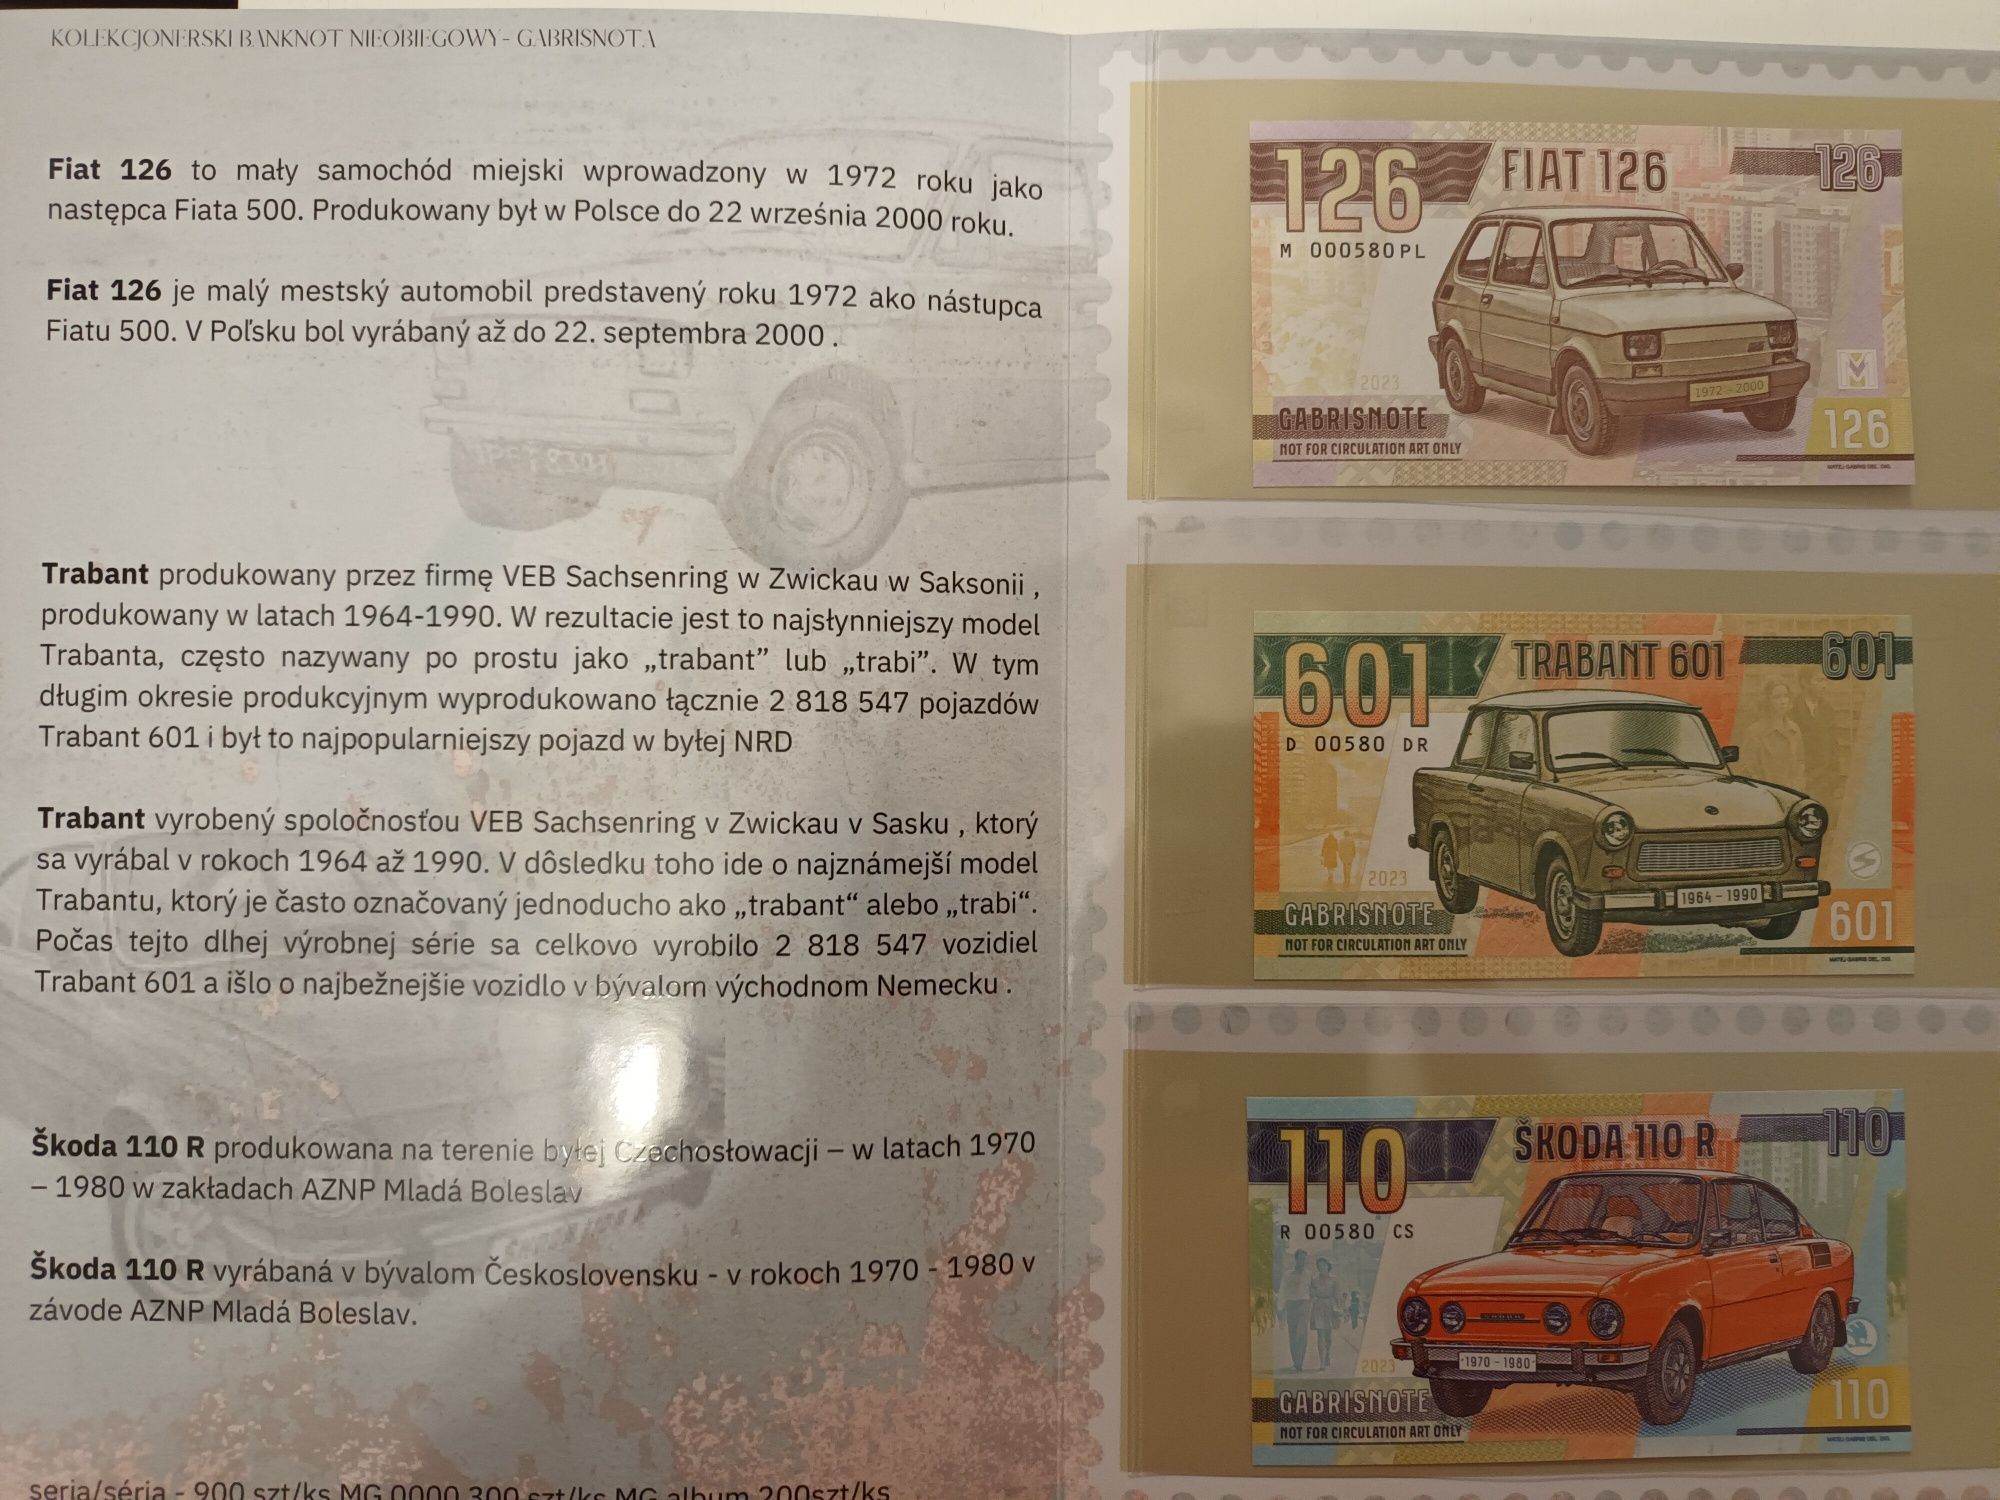 HIT banknoty zestaw samochód + Królowe + foldery ten sam numer